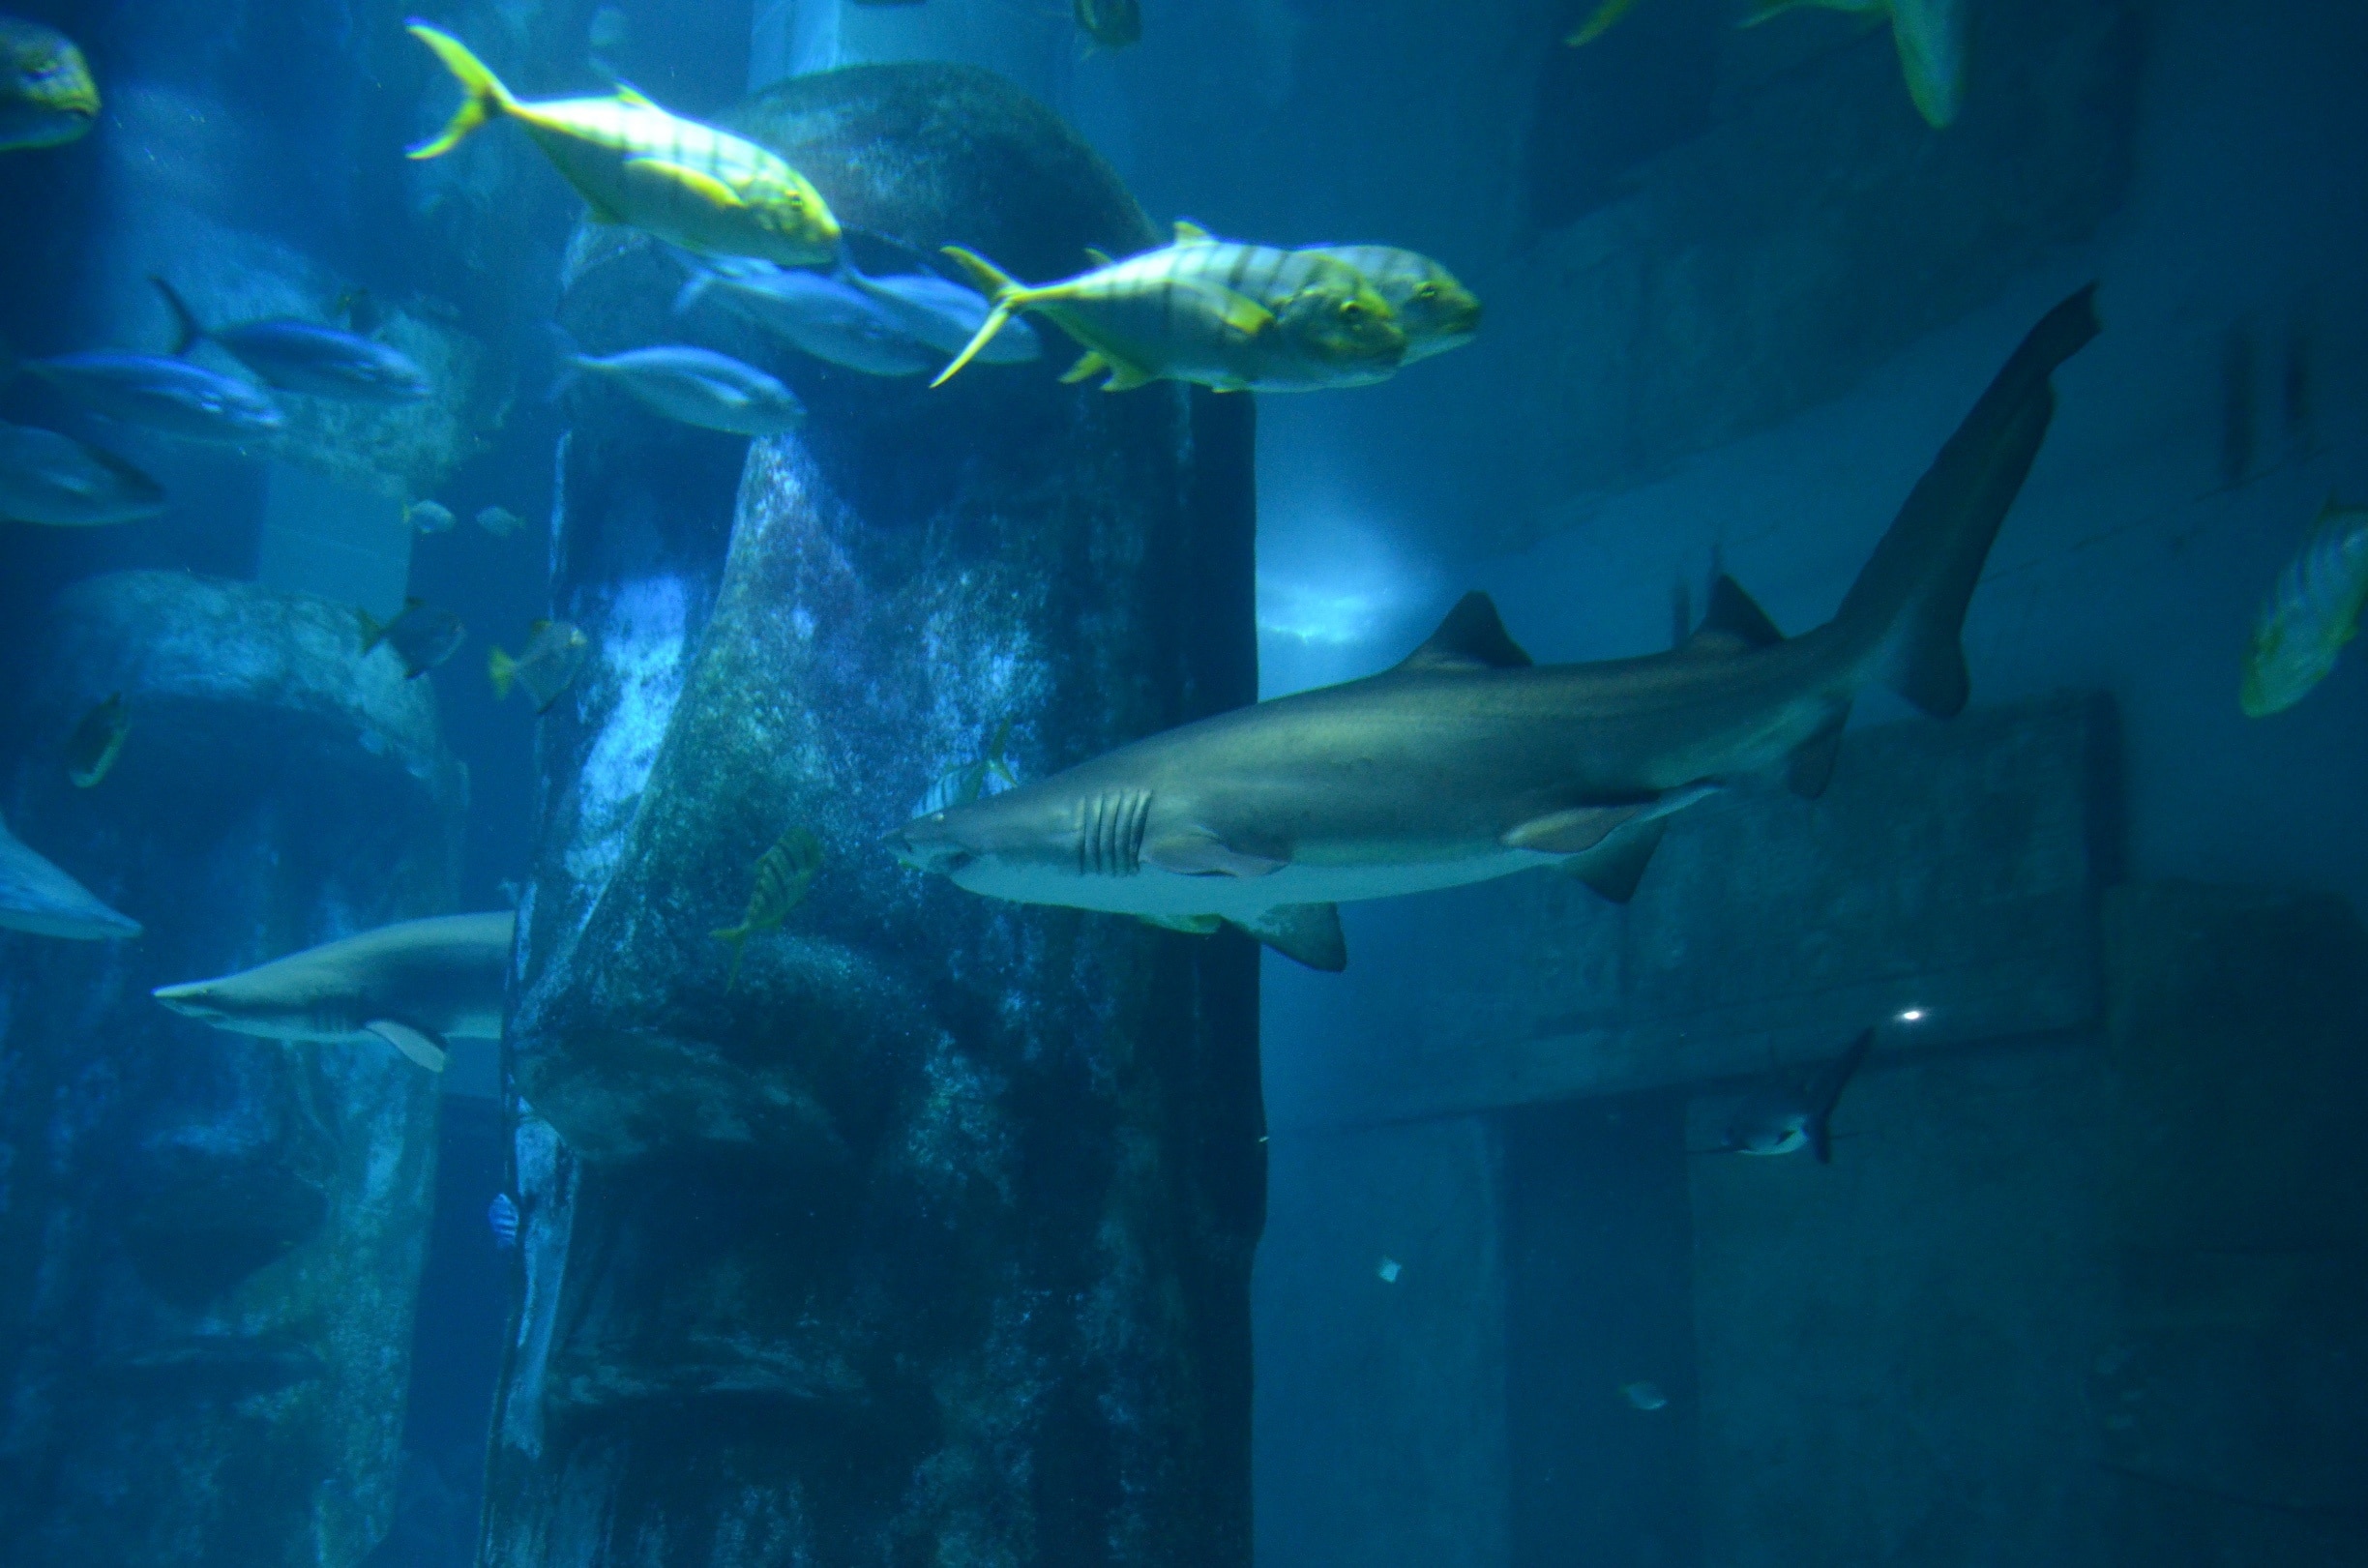 Taken at Sea Life Aquarium in London, UK.
#City #London #SeaLife #Aquarium